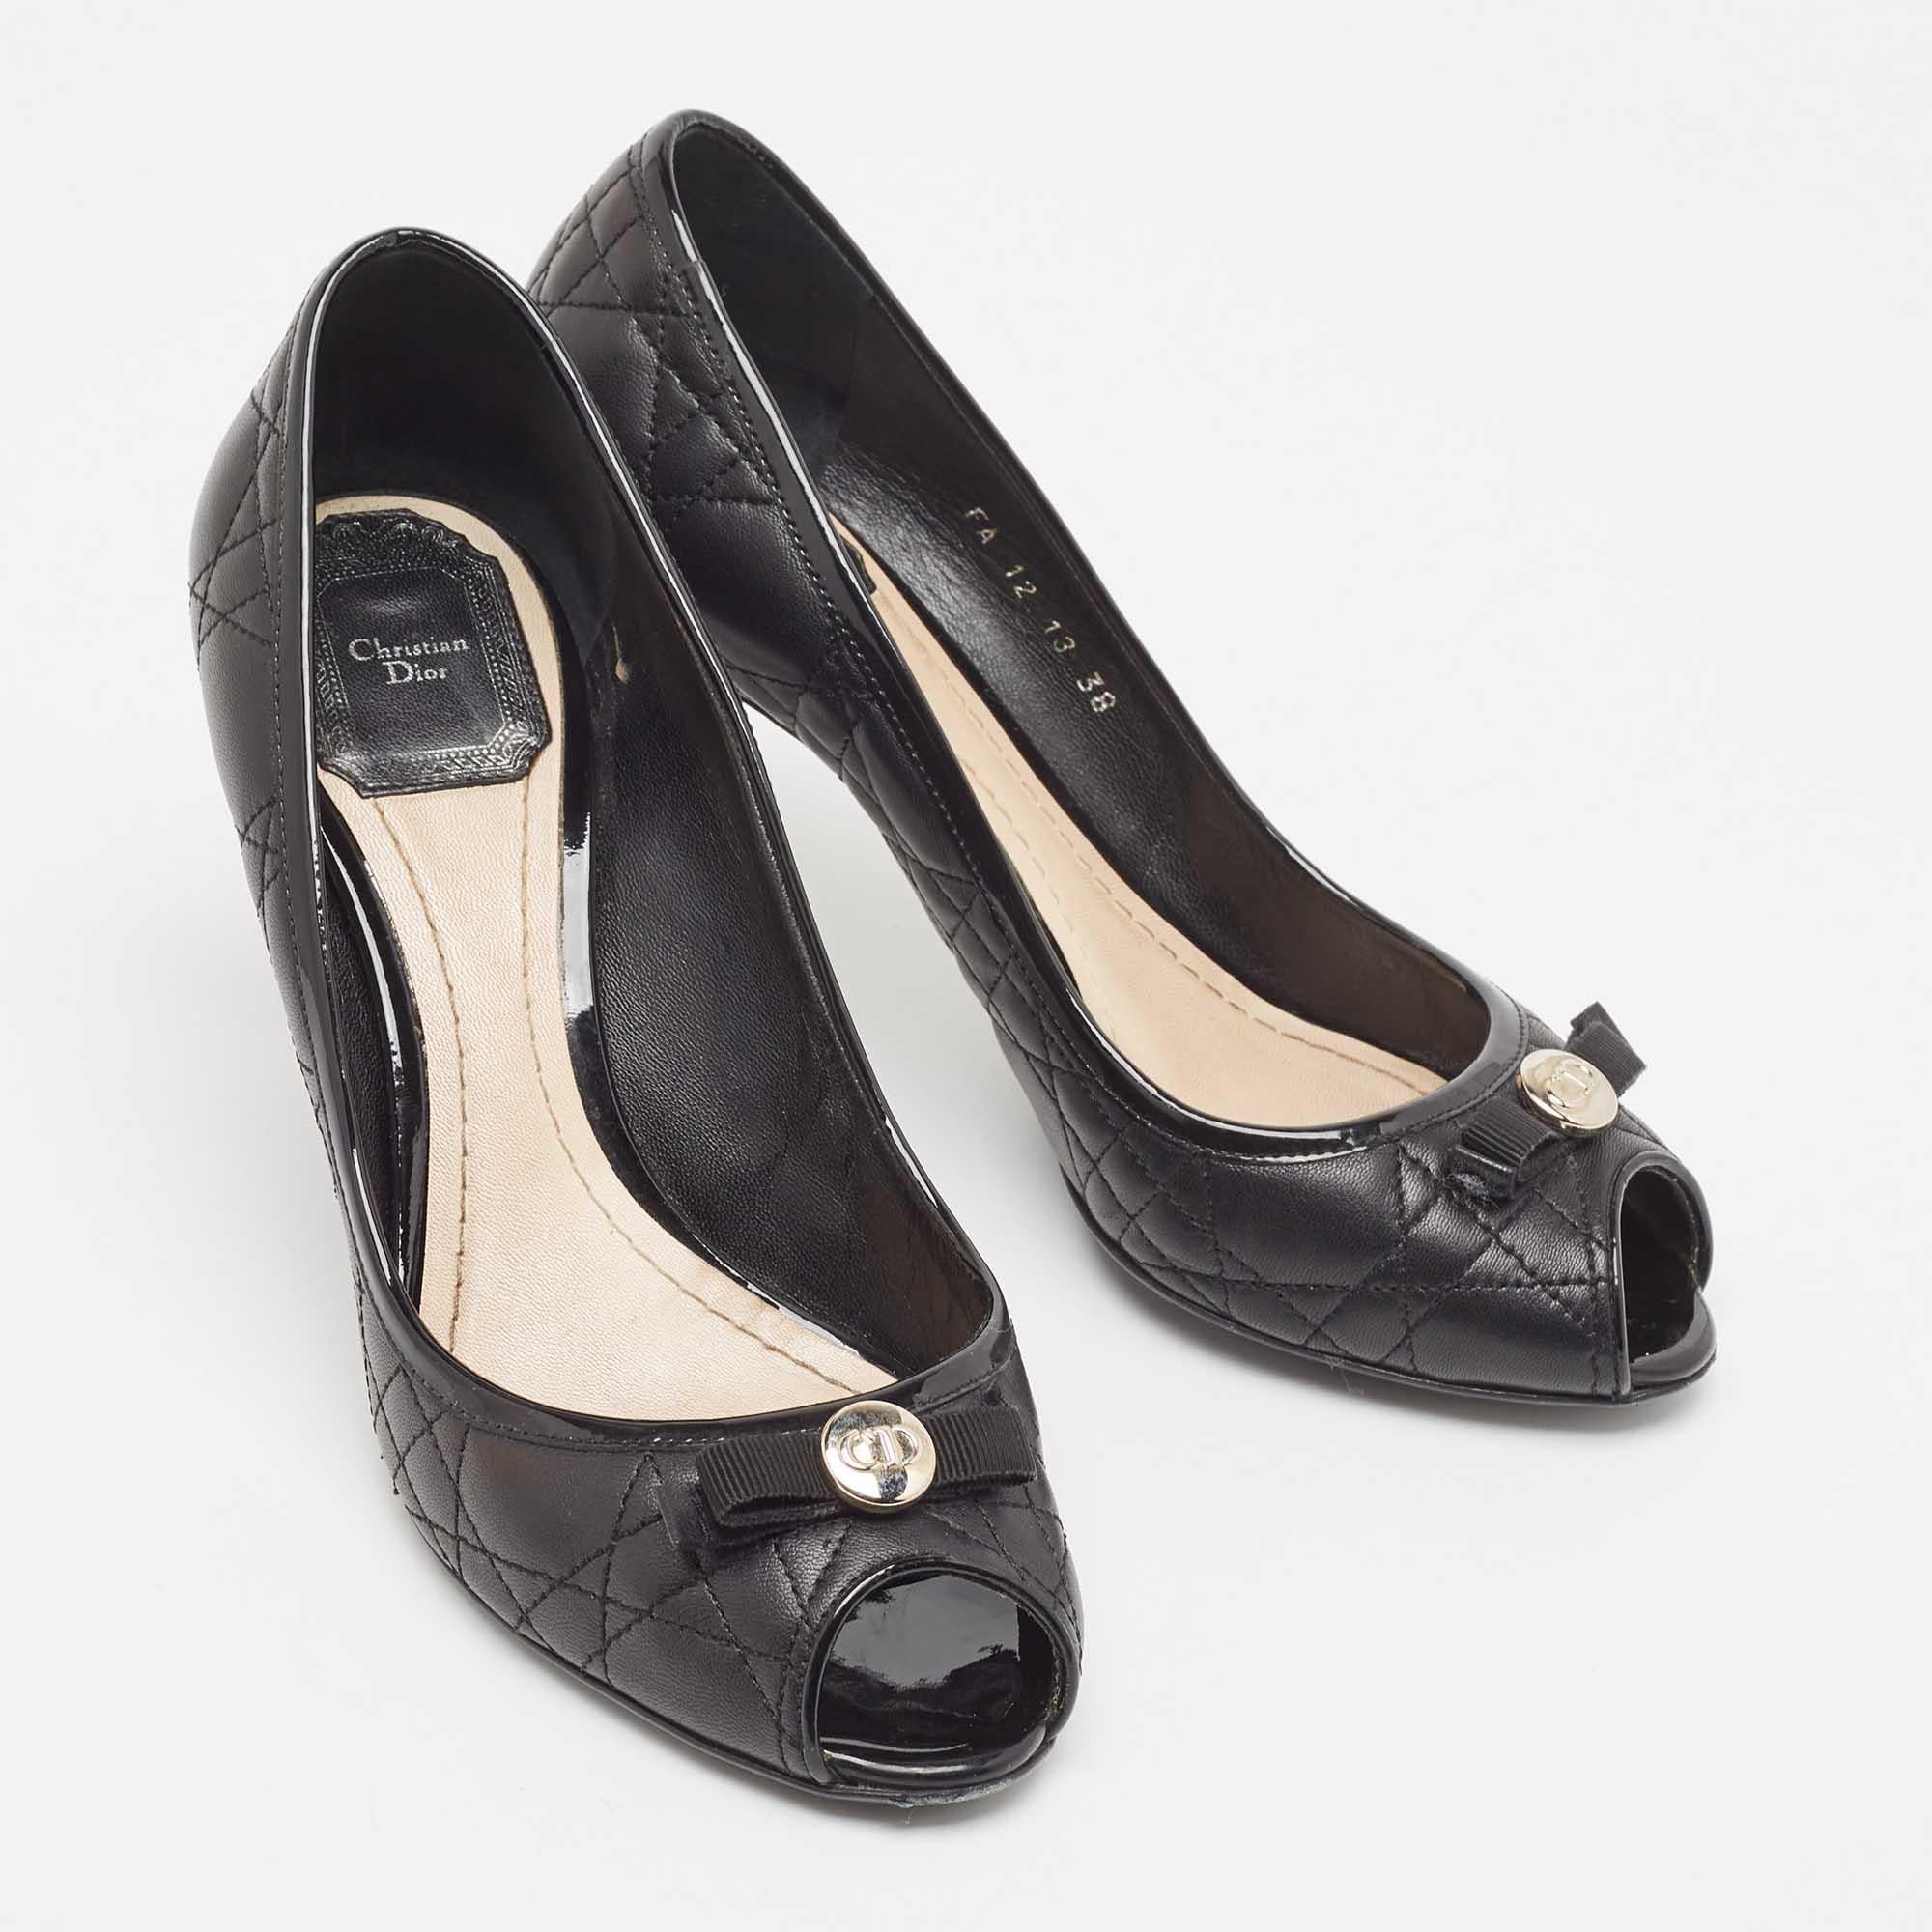 Dior Black Leather and Patent Peep Toe Pumps Size 38 In Good Condition For Sale In Dubai, Al Qouz 2